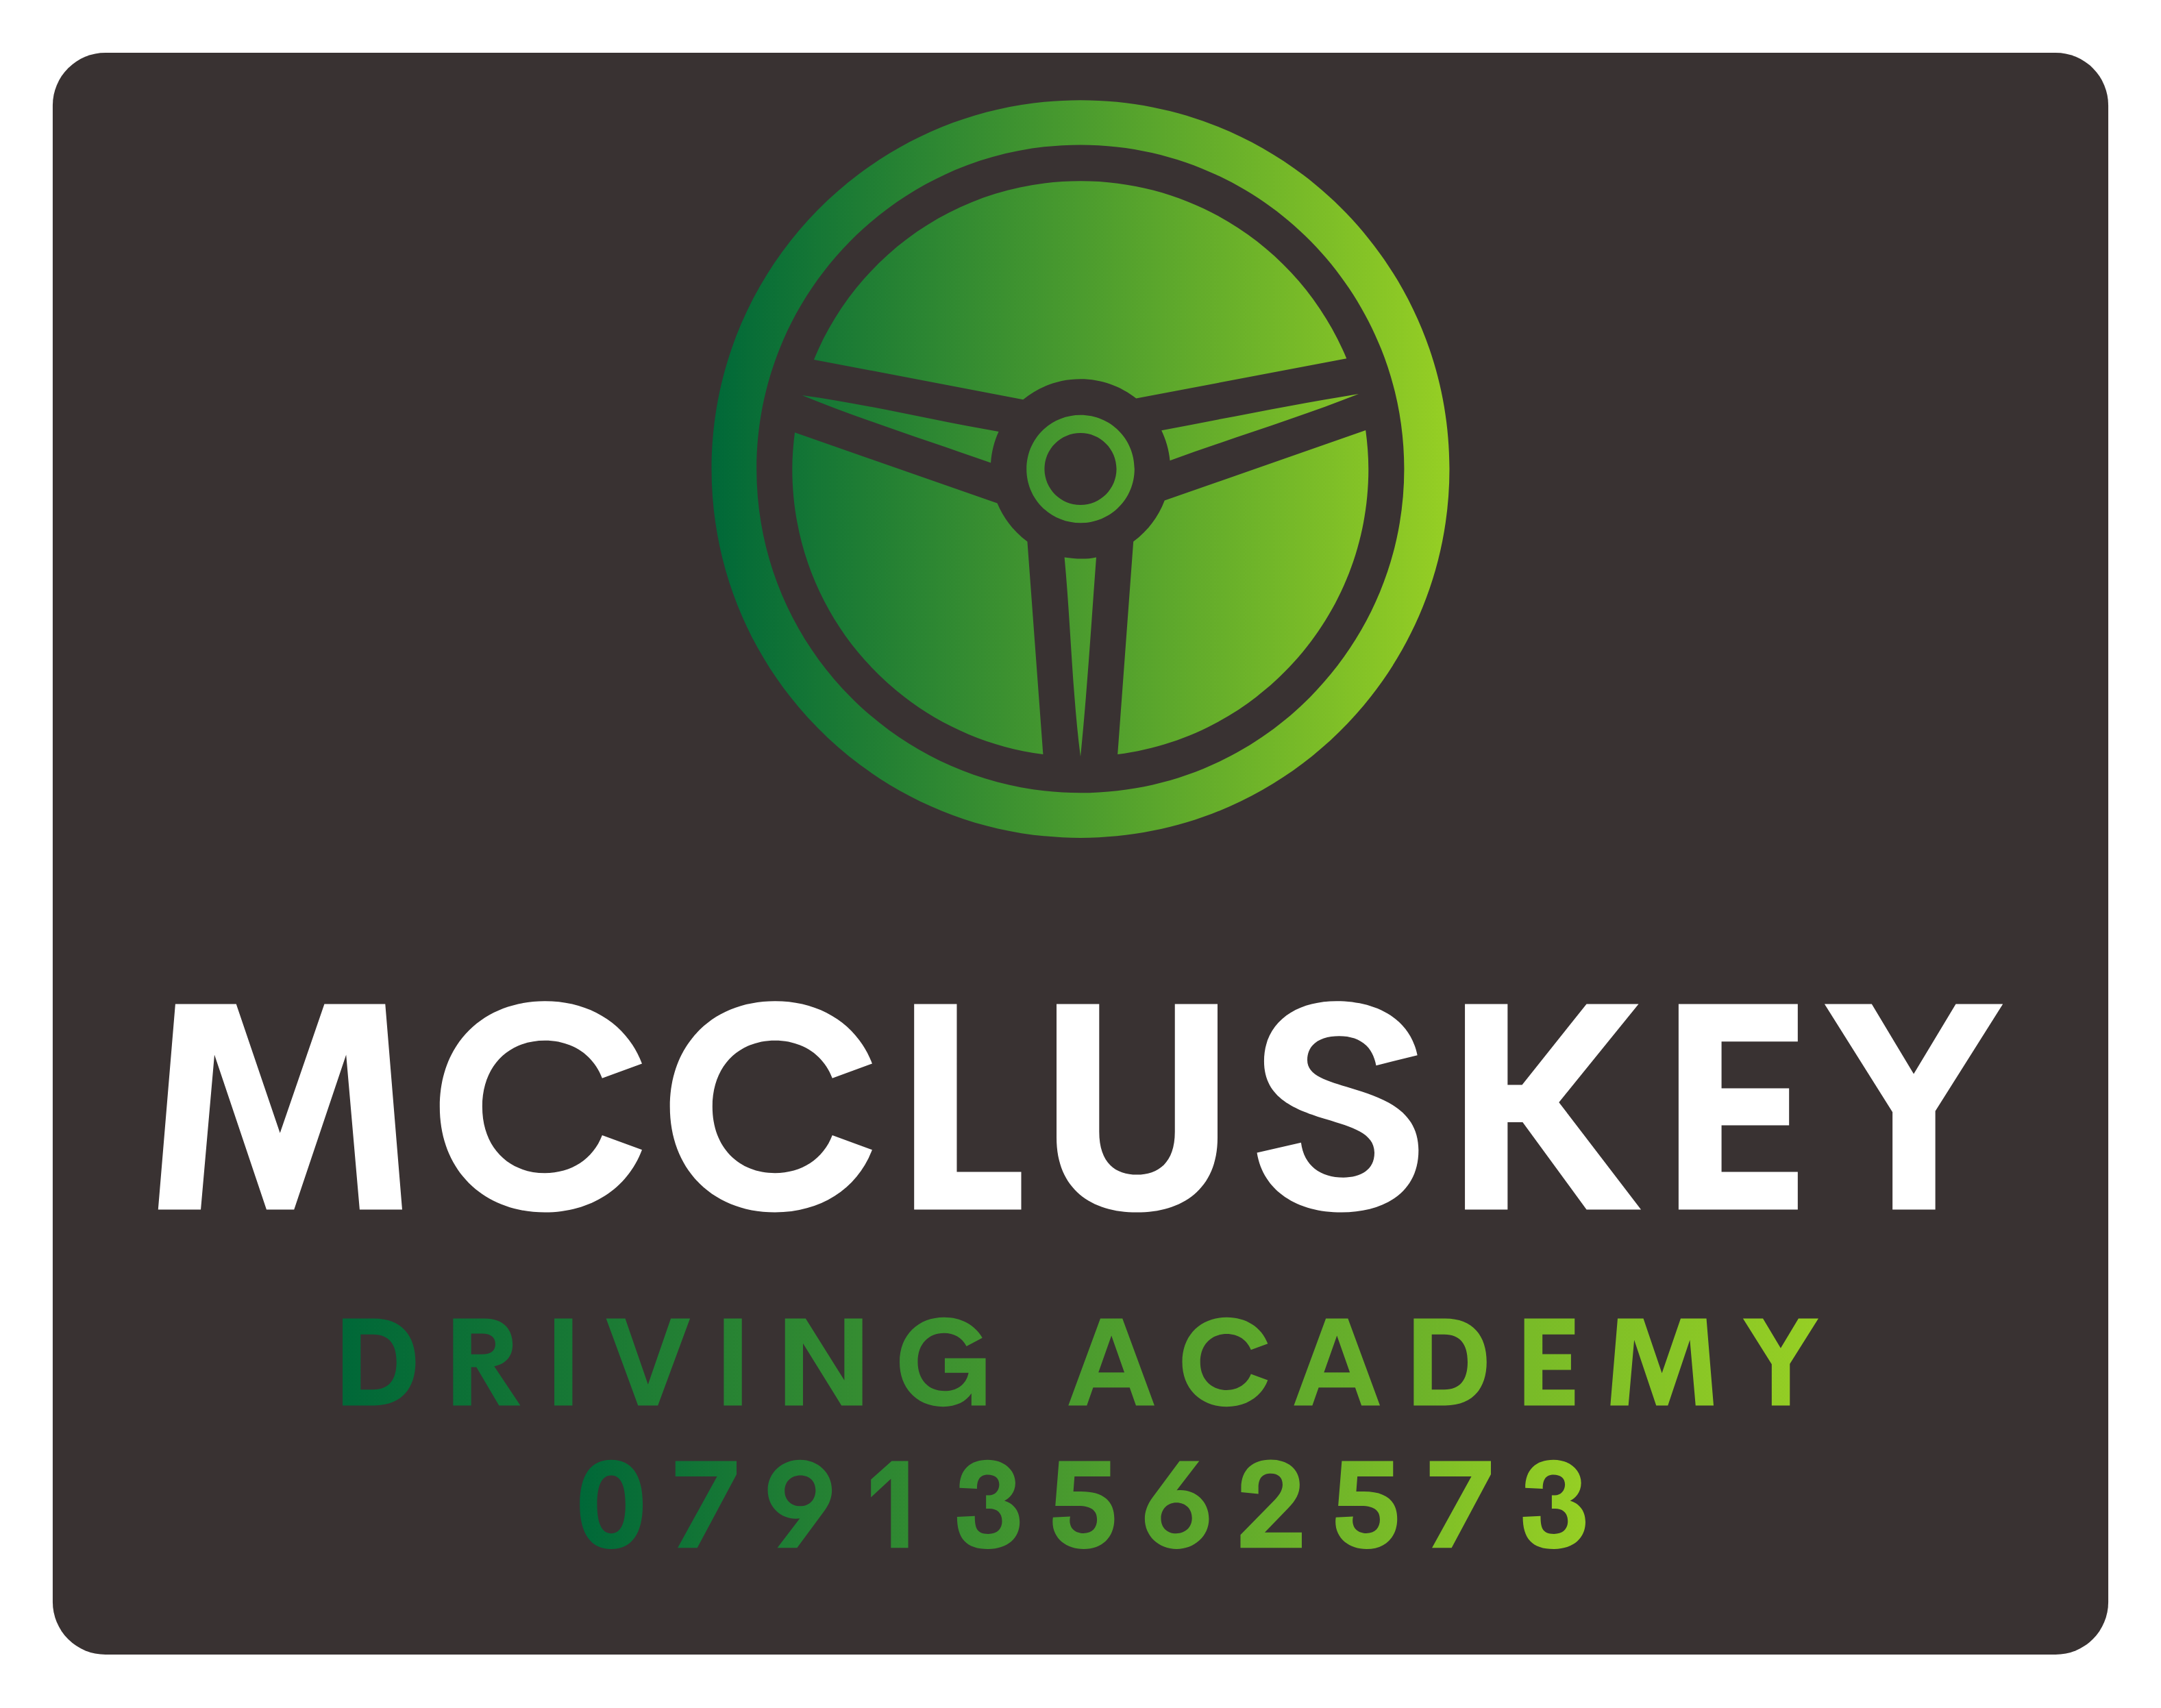 McCluskey Driving Academy